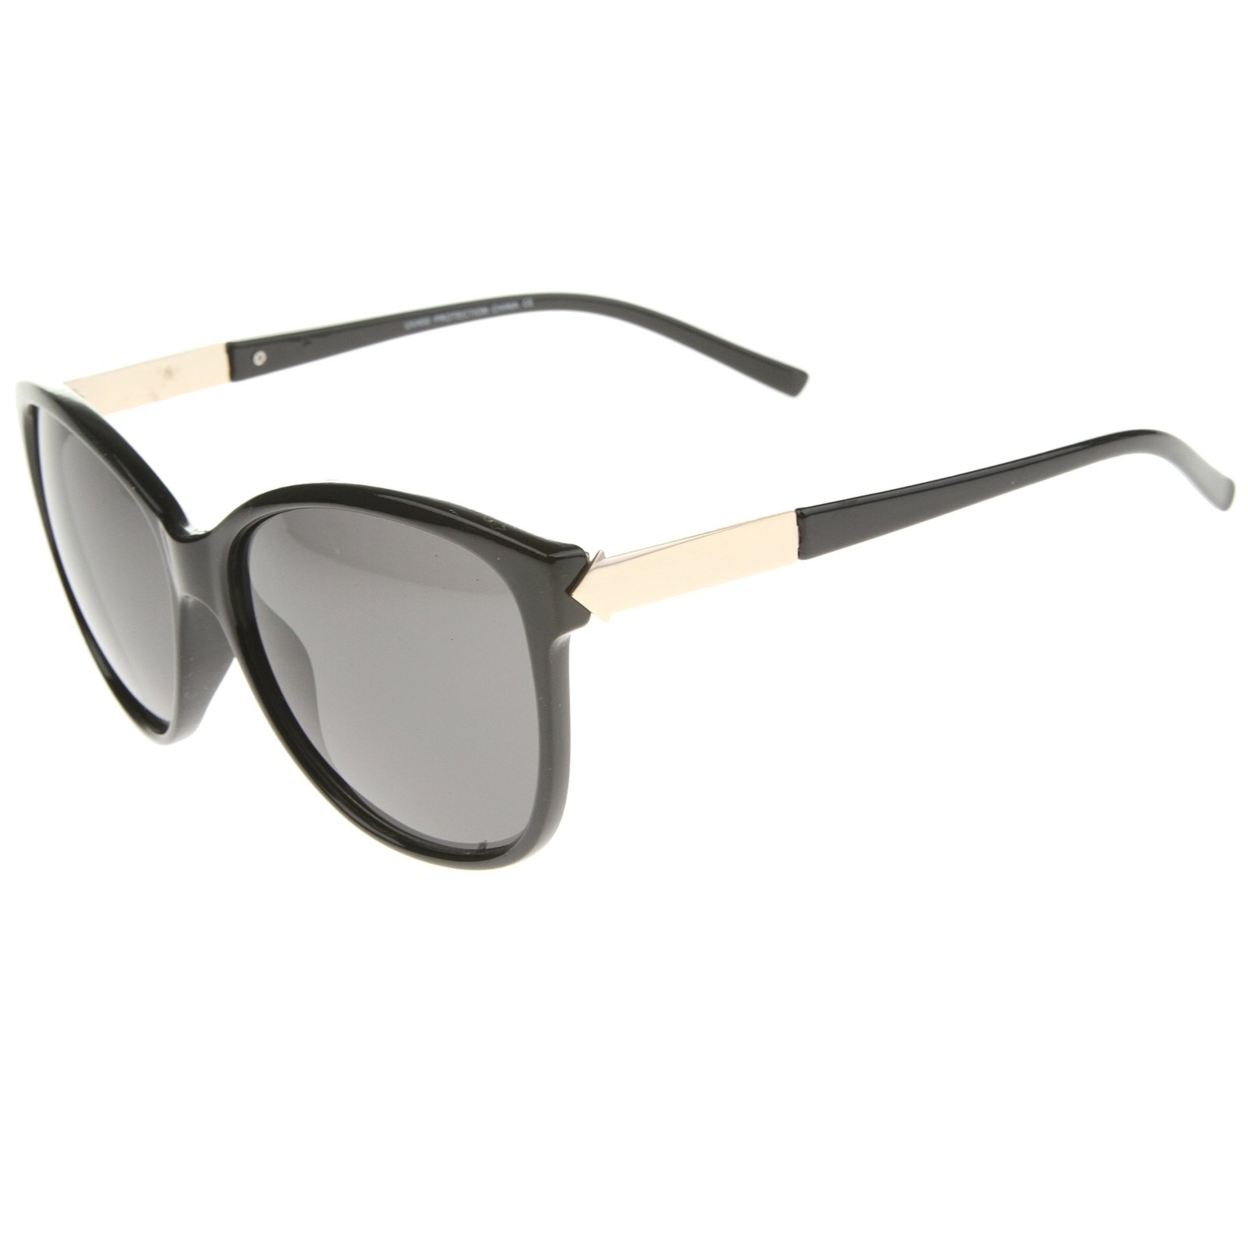 Women's Glam Fashion Metal Temple Oversize Cat Eye Sunglasses 59mm - Black-Silver / Lavender